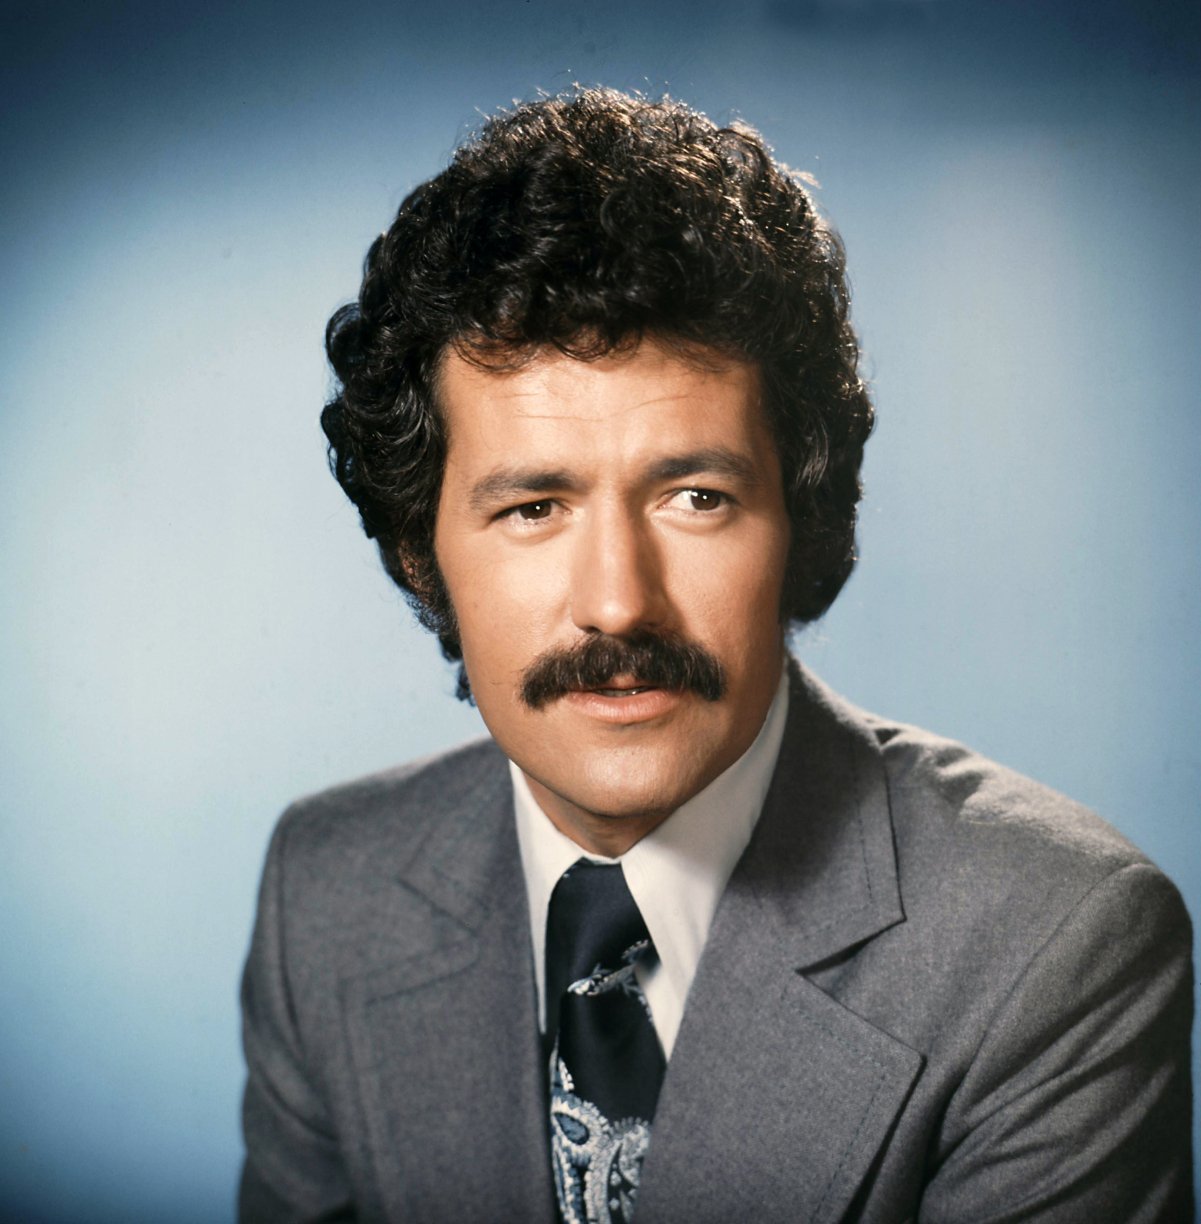 Alex Trebek in 1984, the year he joined 'Jeopardy!' as host